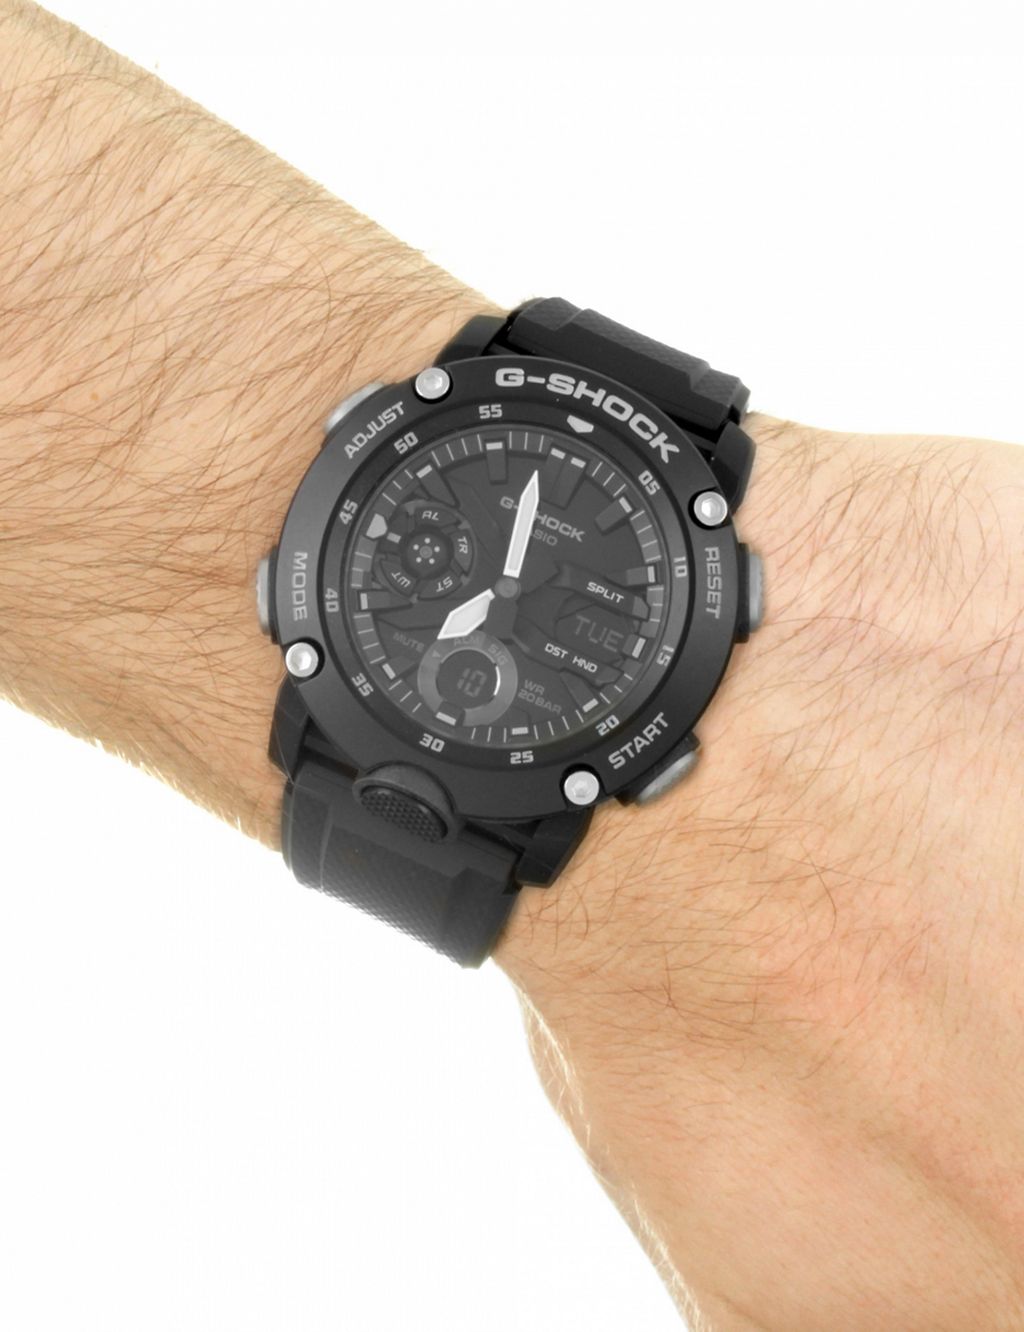 Casio G-Shock Waterproof Watch 4 of 5